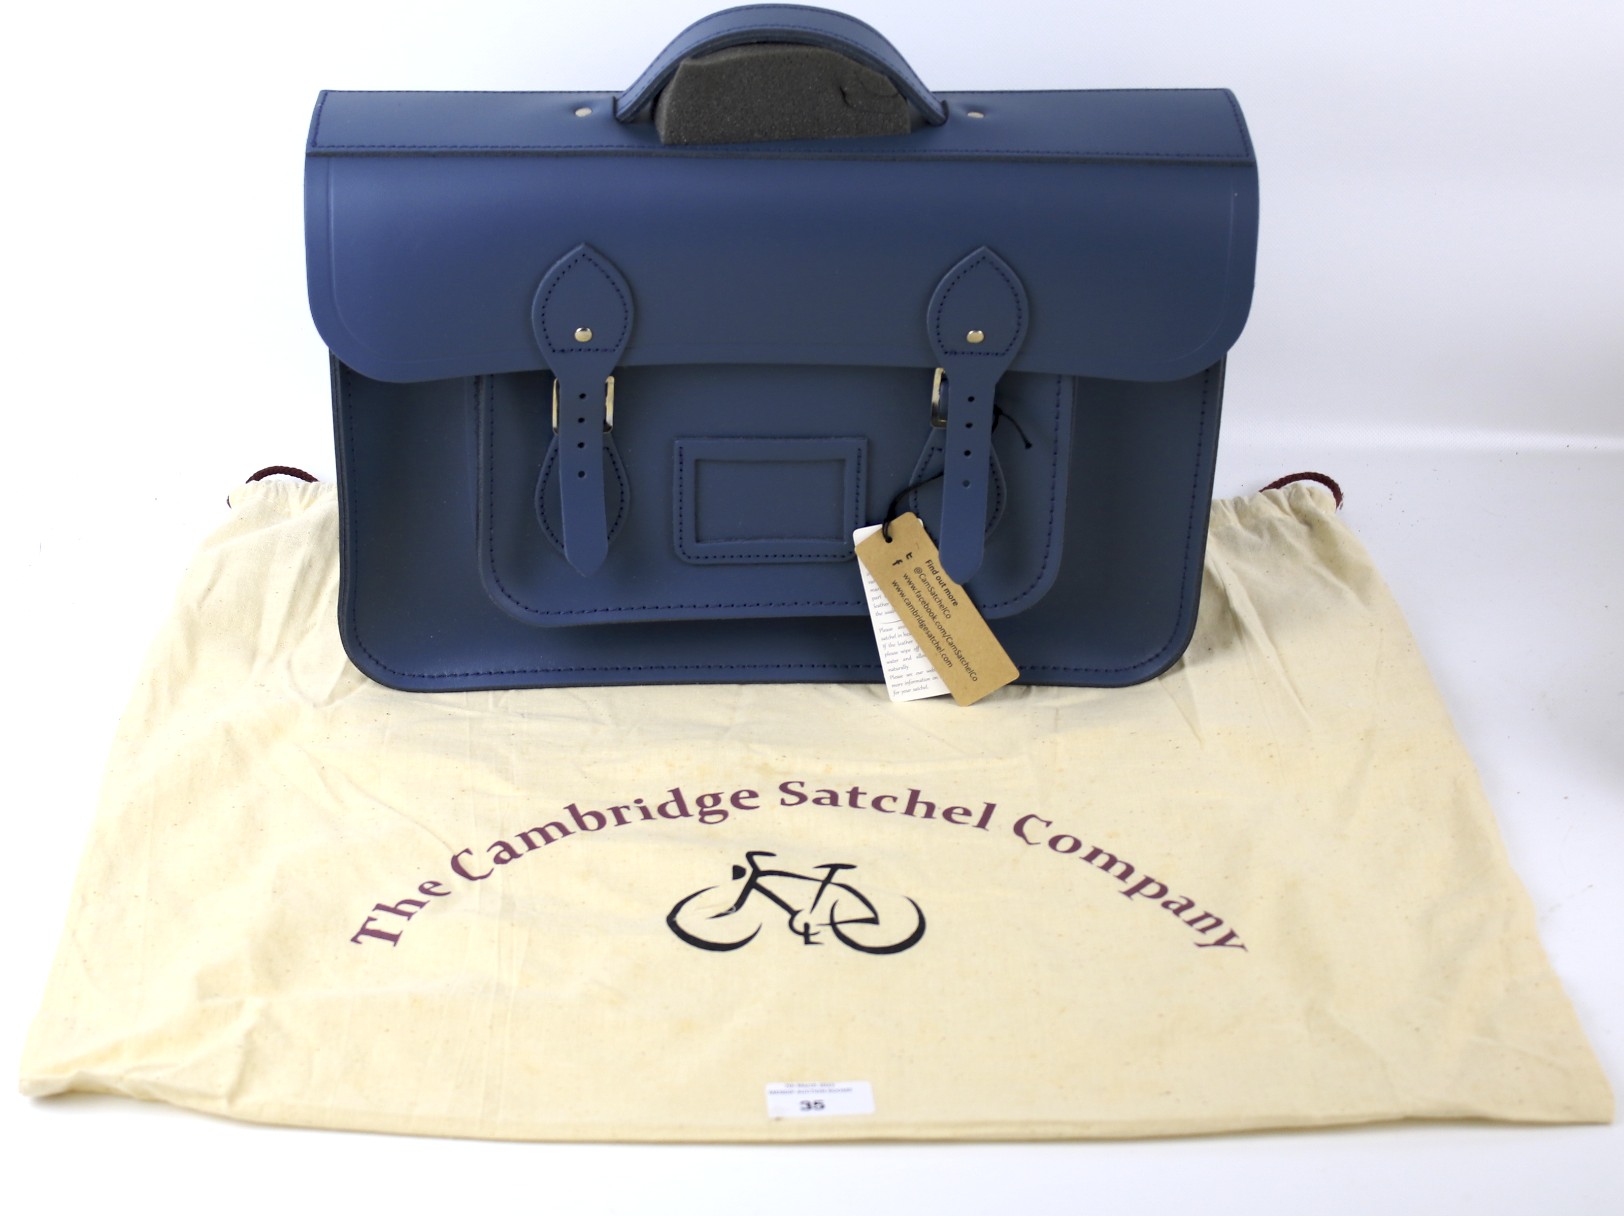 A Cambridge satchel company leather bag.